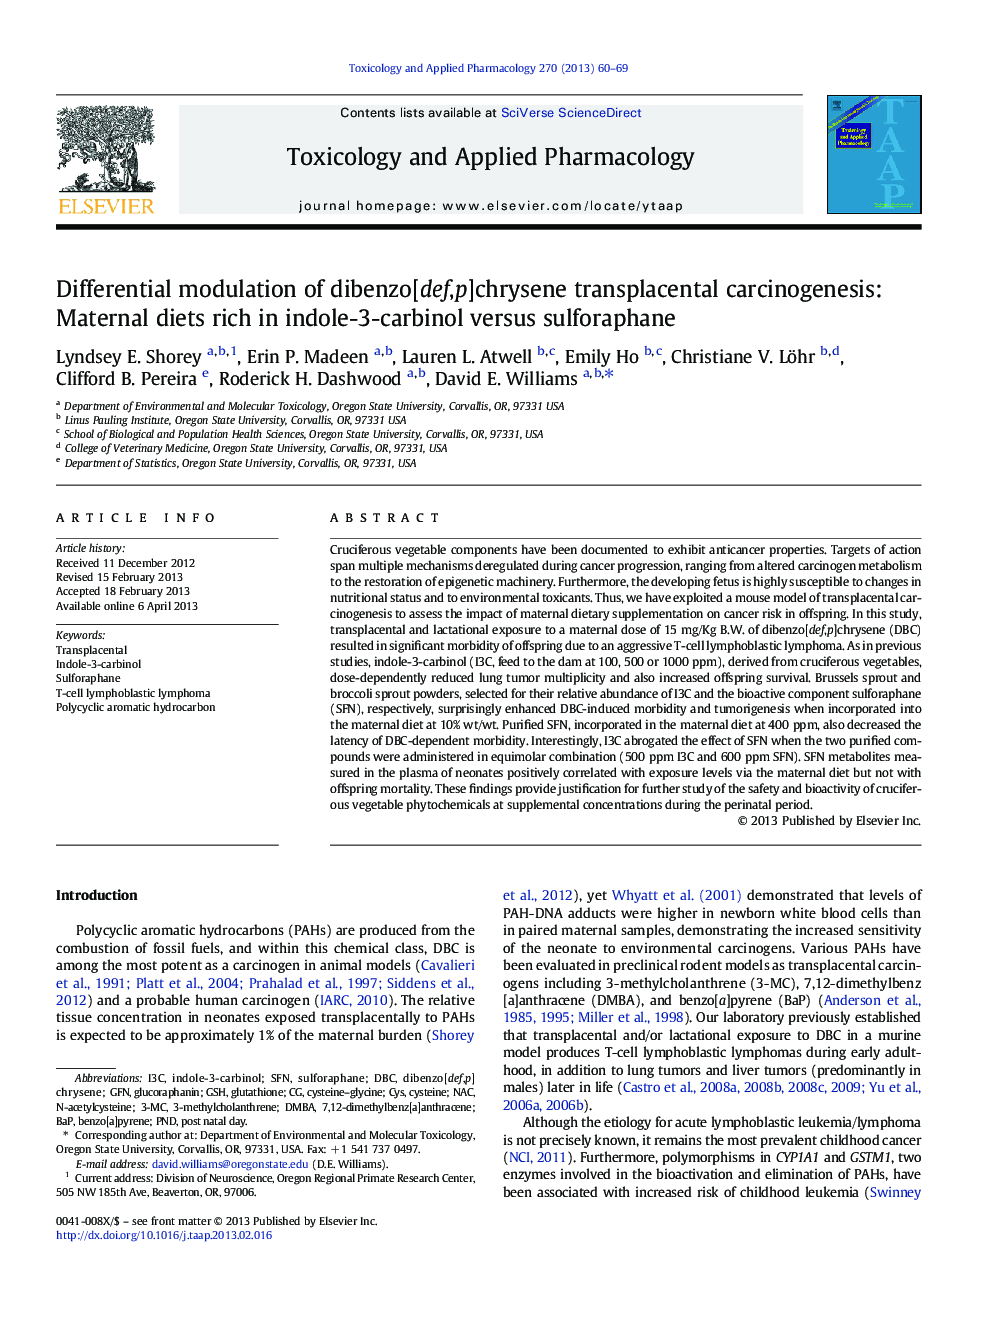 Differential modulation of dibenzo[def,p]chrysene transplacental carcinogenesis: Maternal diets rich in indole-3-carbinol versus sulforaphane